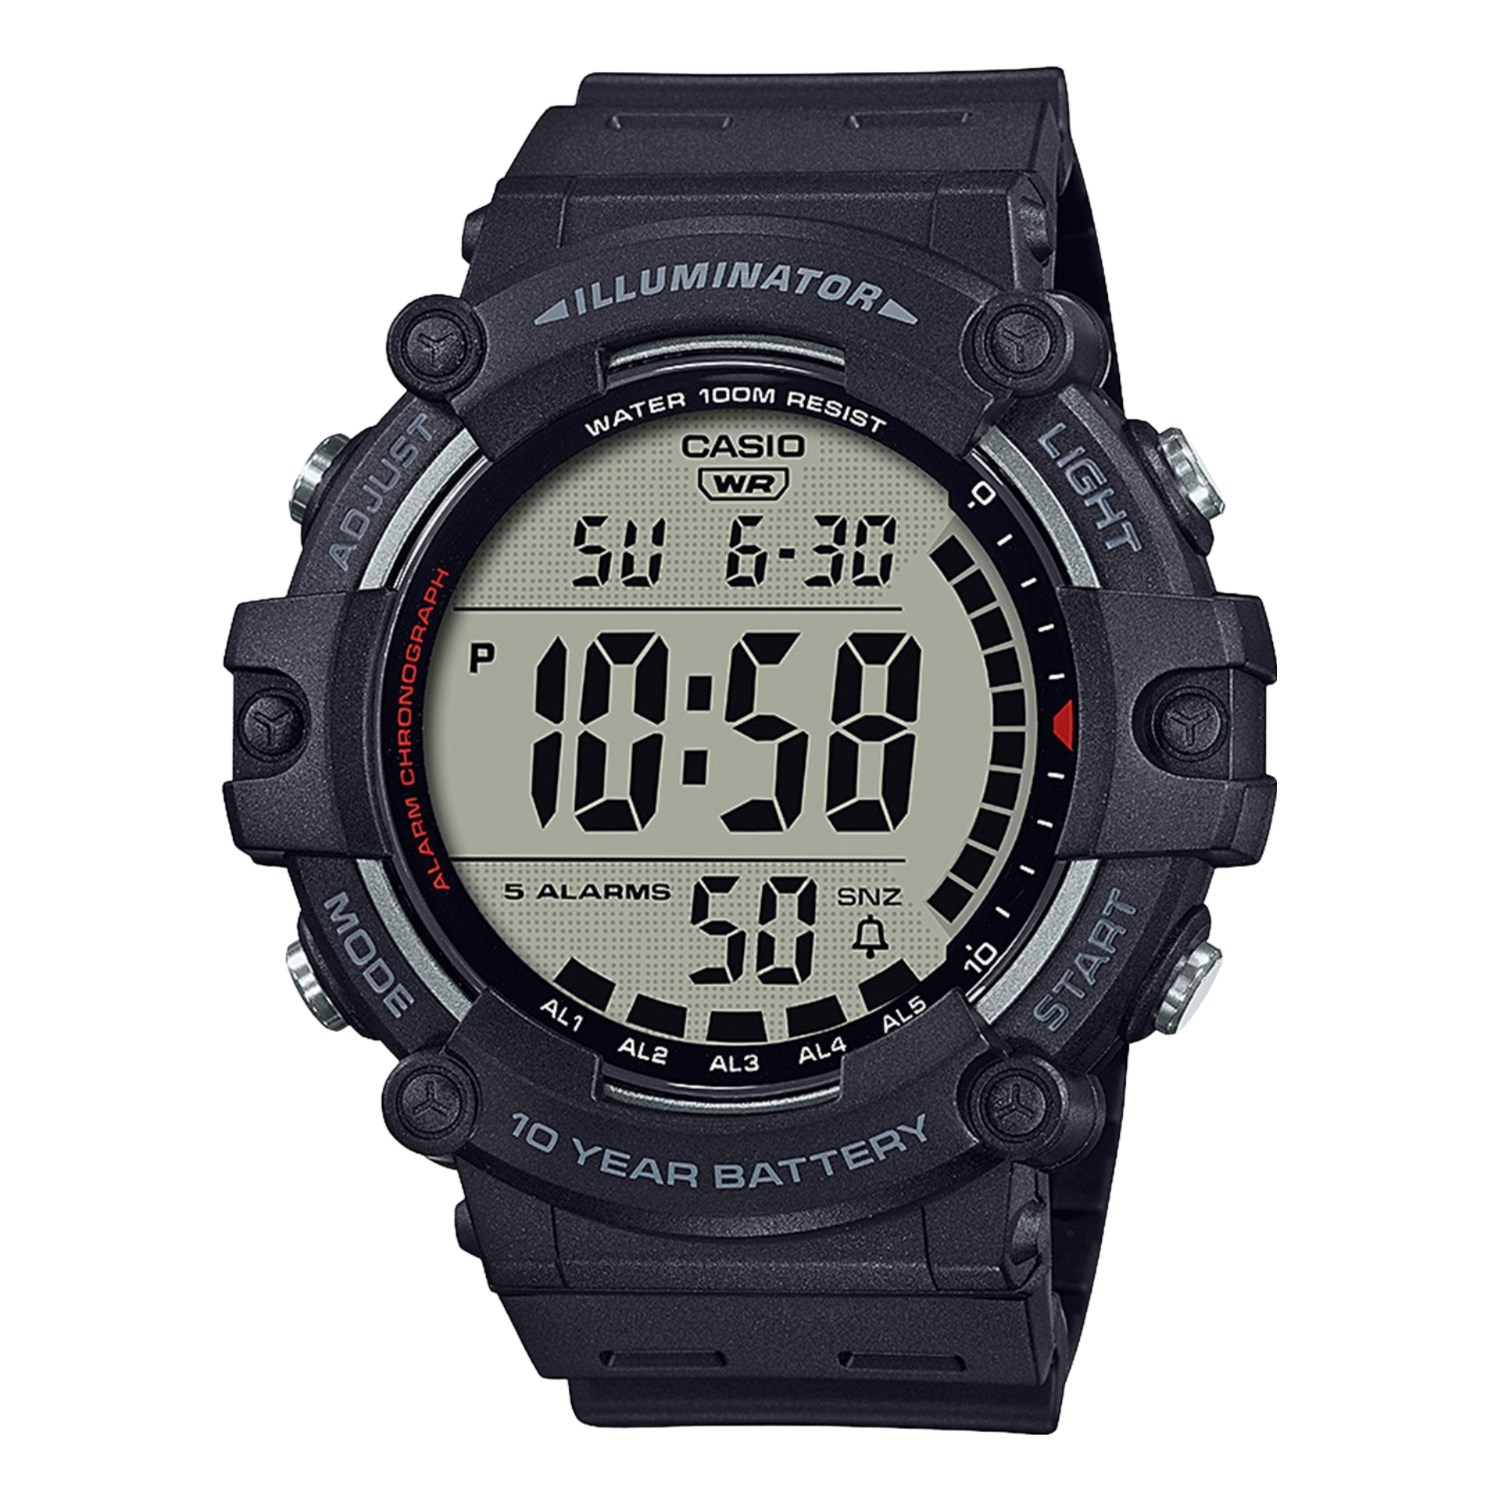 Casio Digitaal Heren Horloge zwart resin AE-1500WH-1AVEF